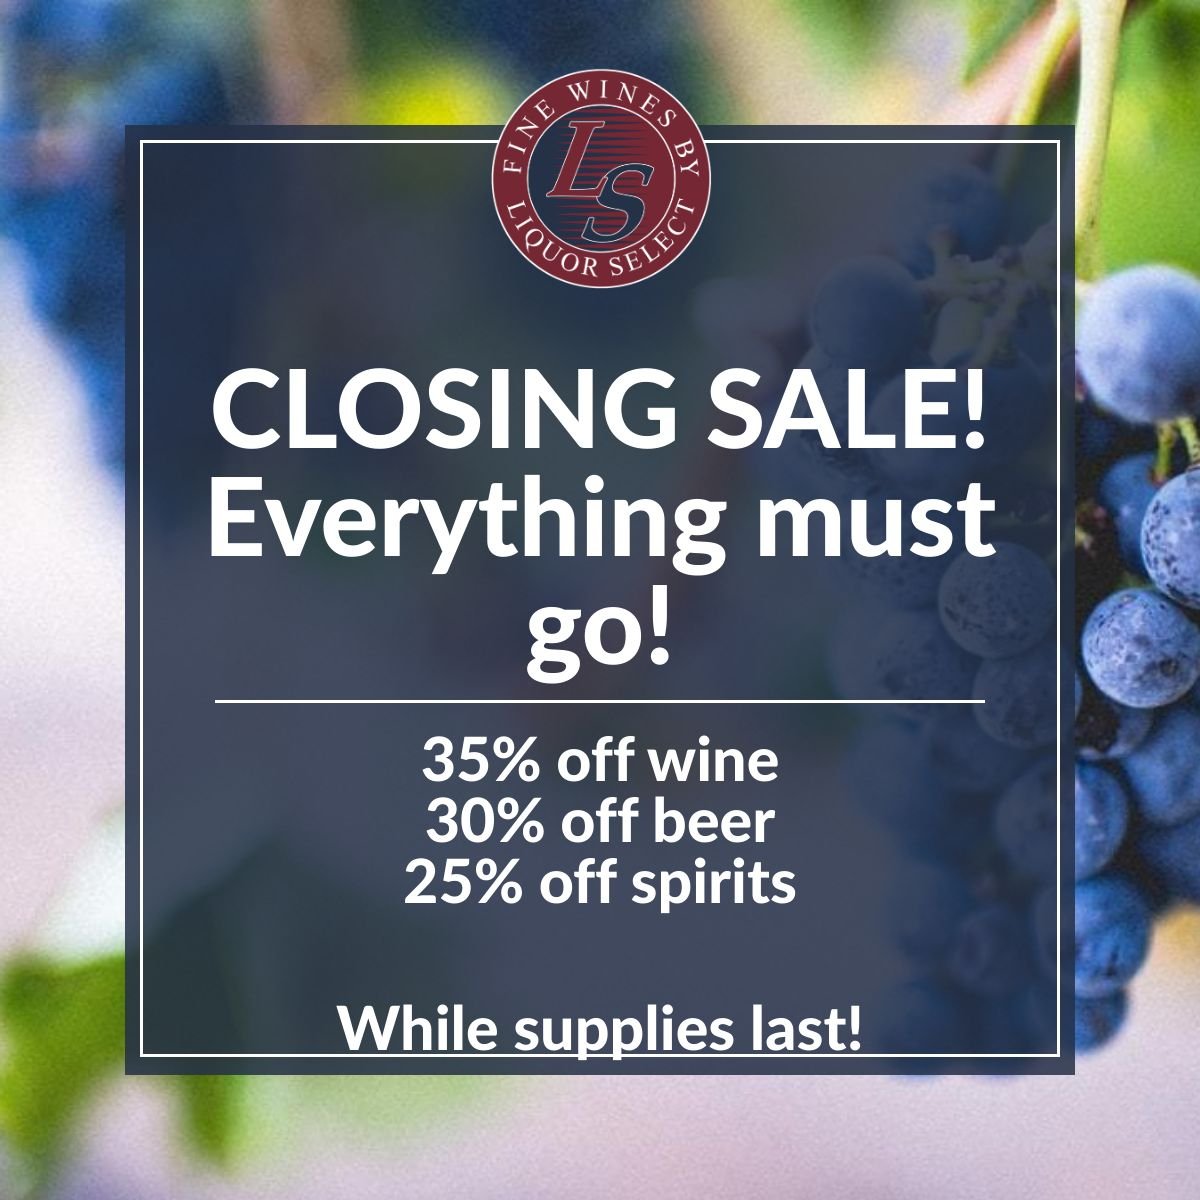 📣Closing Sale! Everything must go! Save 35% on Wine, 30% on Beer, and 25% on Spirits. Stock up while supplies last!🍻🍷

#yeg #yegwine #yegbeer #craftbeer #yeglocal #shoplocalyeg #edmontonwine #yegdeals